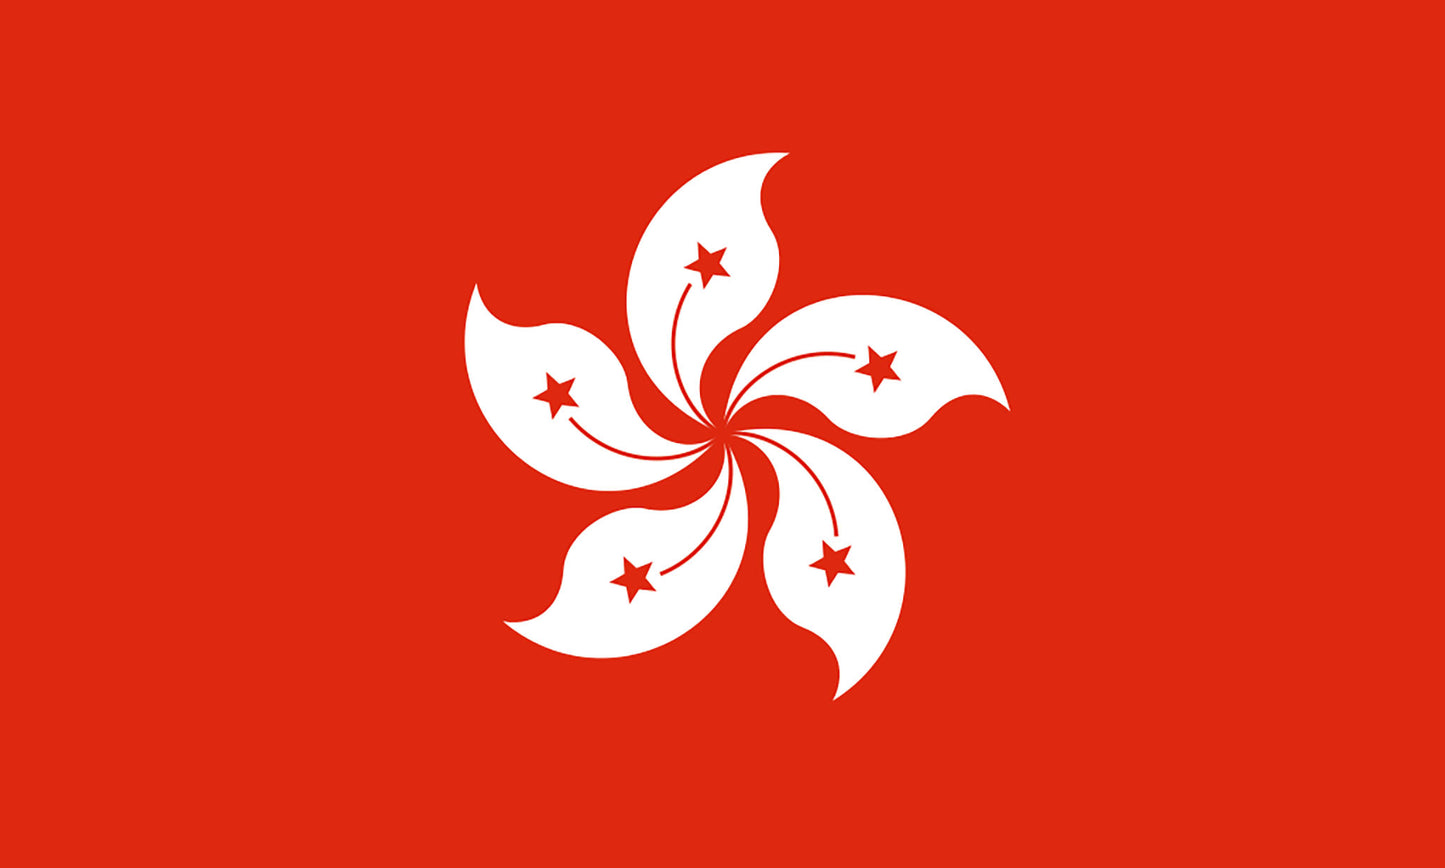 UF-HKG-150x90 - флаг Гонконга